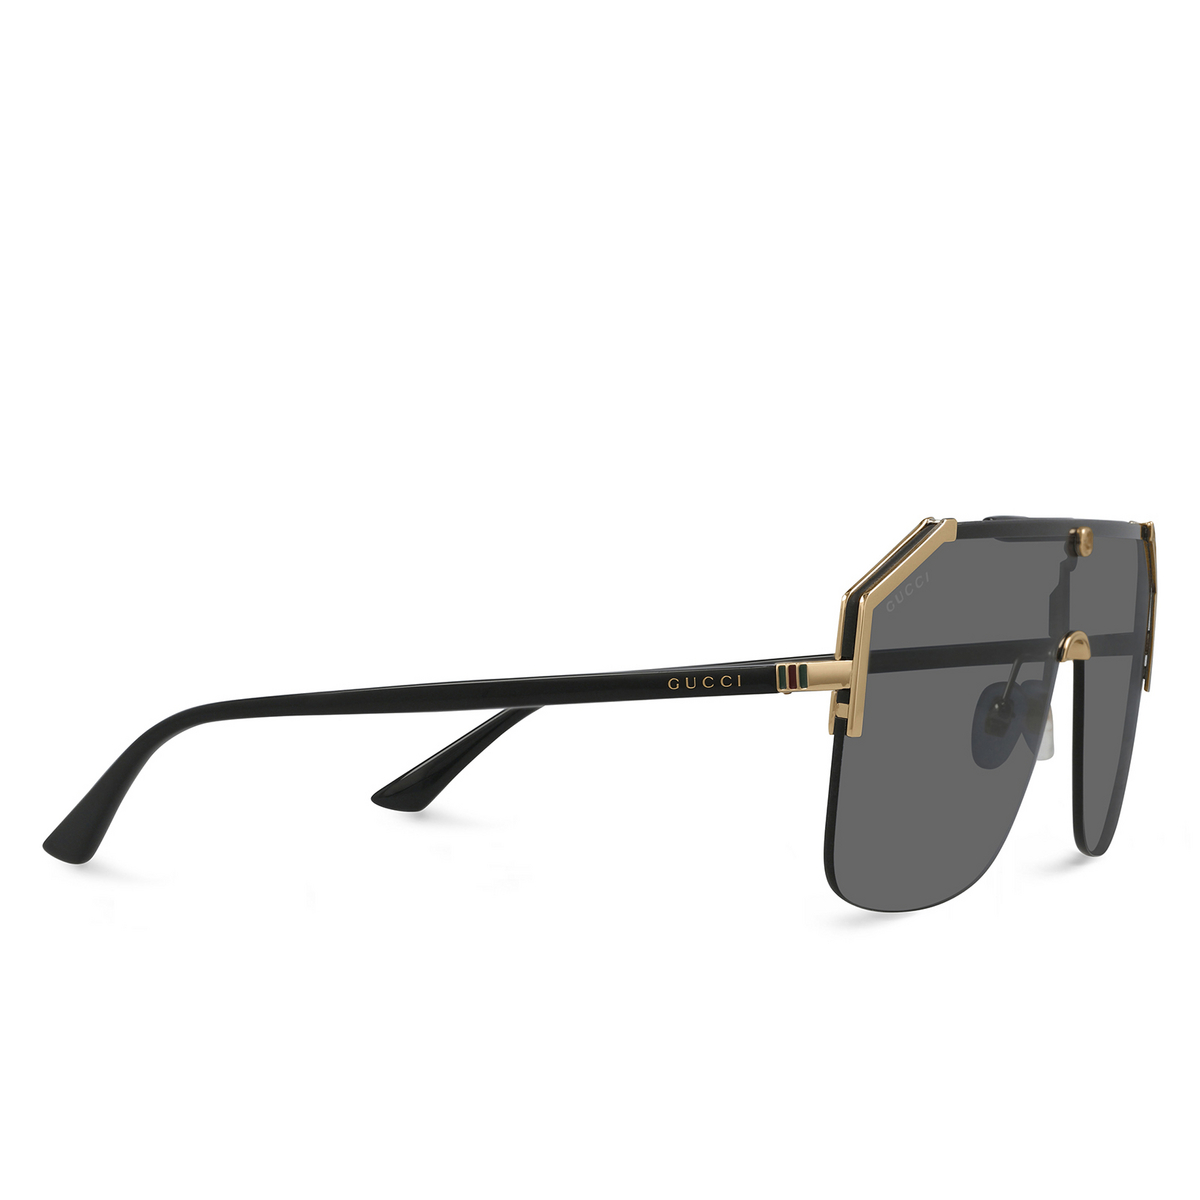 Gucci® Mask Sunglasses: GG0291S color Gold 001 - three-quarters view.